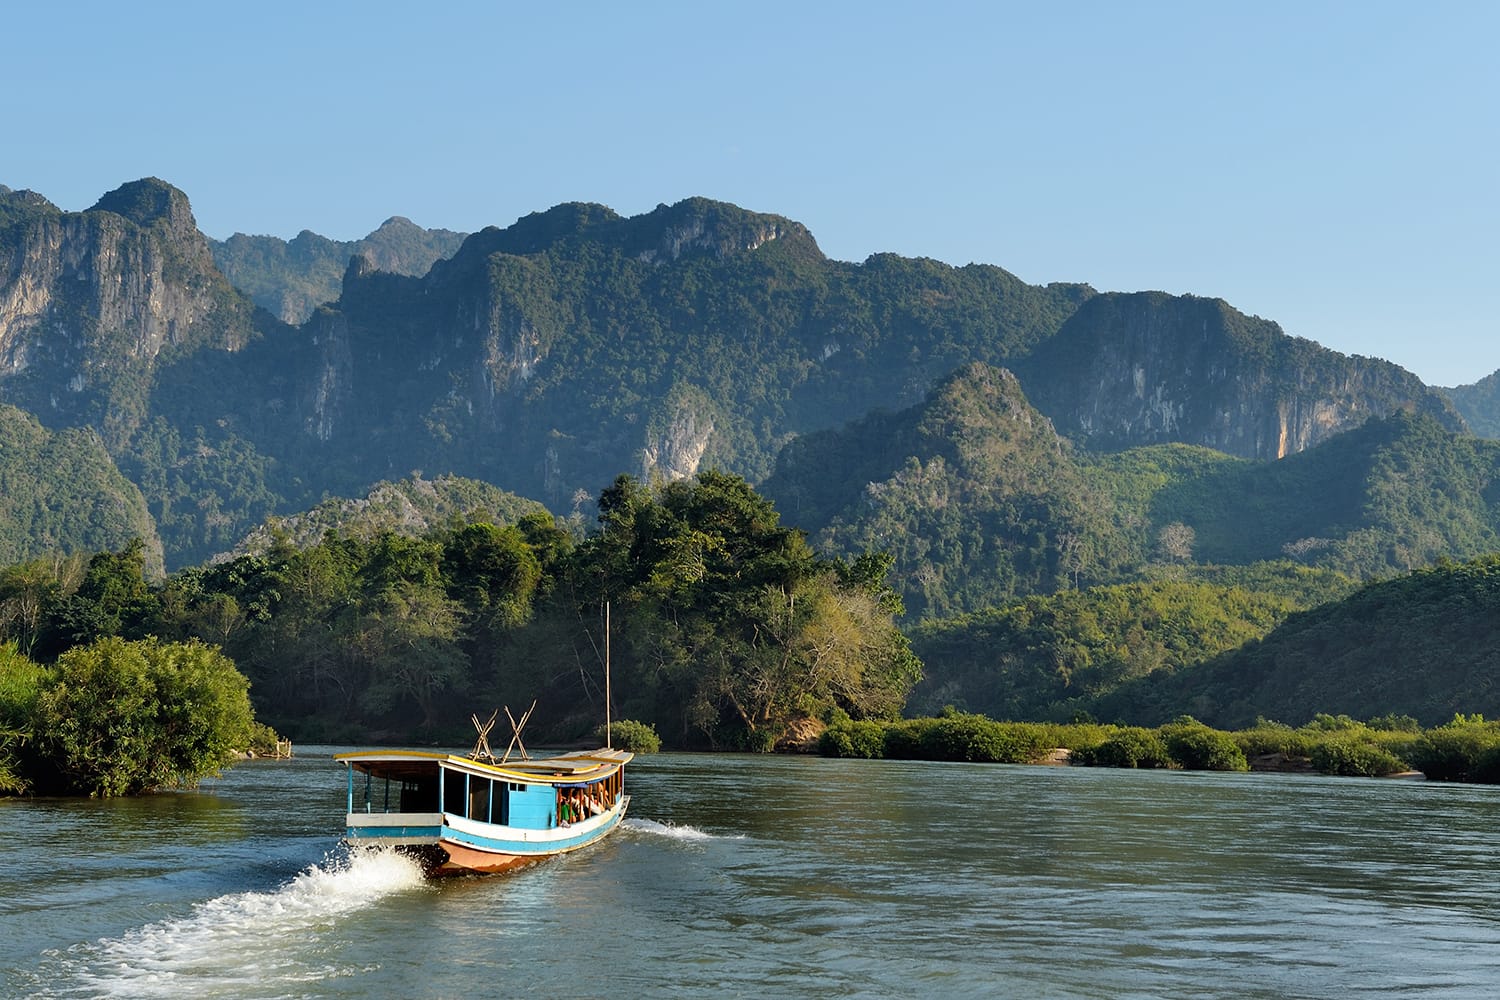 Beautiful landscape with boat tour at Mekong river near Luang Prabang in Laos.